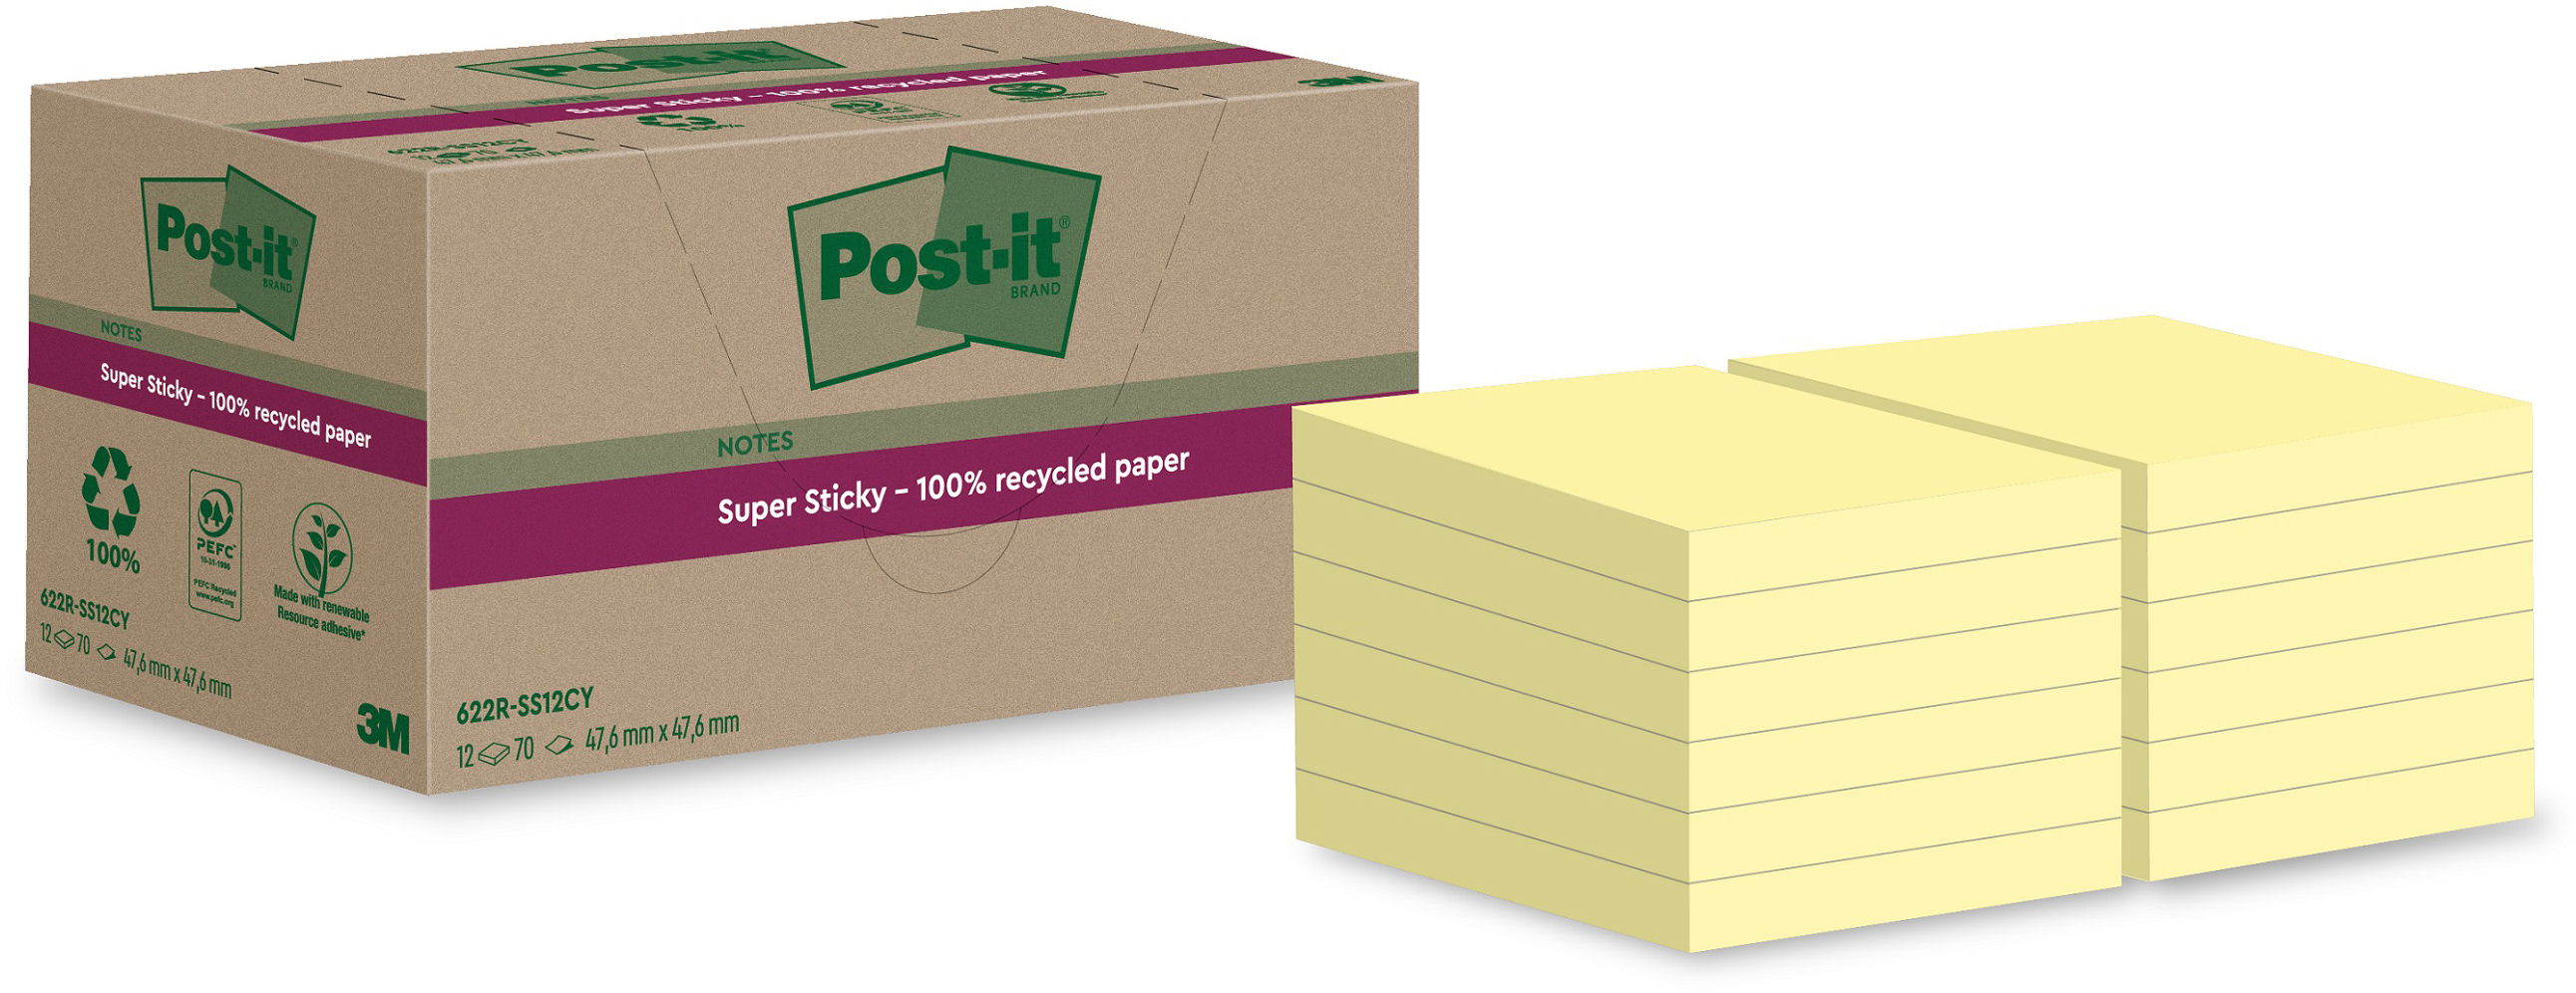 POST-IT SuperSticky Notes 47.6x47.6mm 622 RSS12CY Recycling,gelb 12x70 Blatt